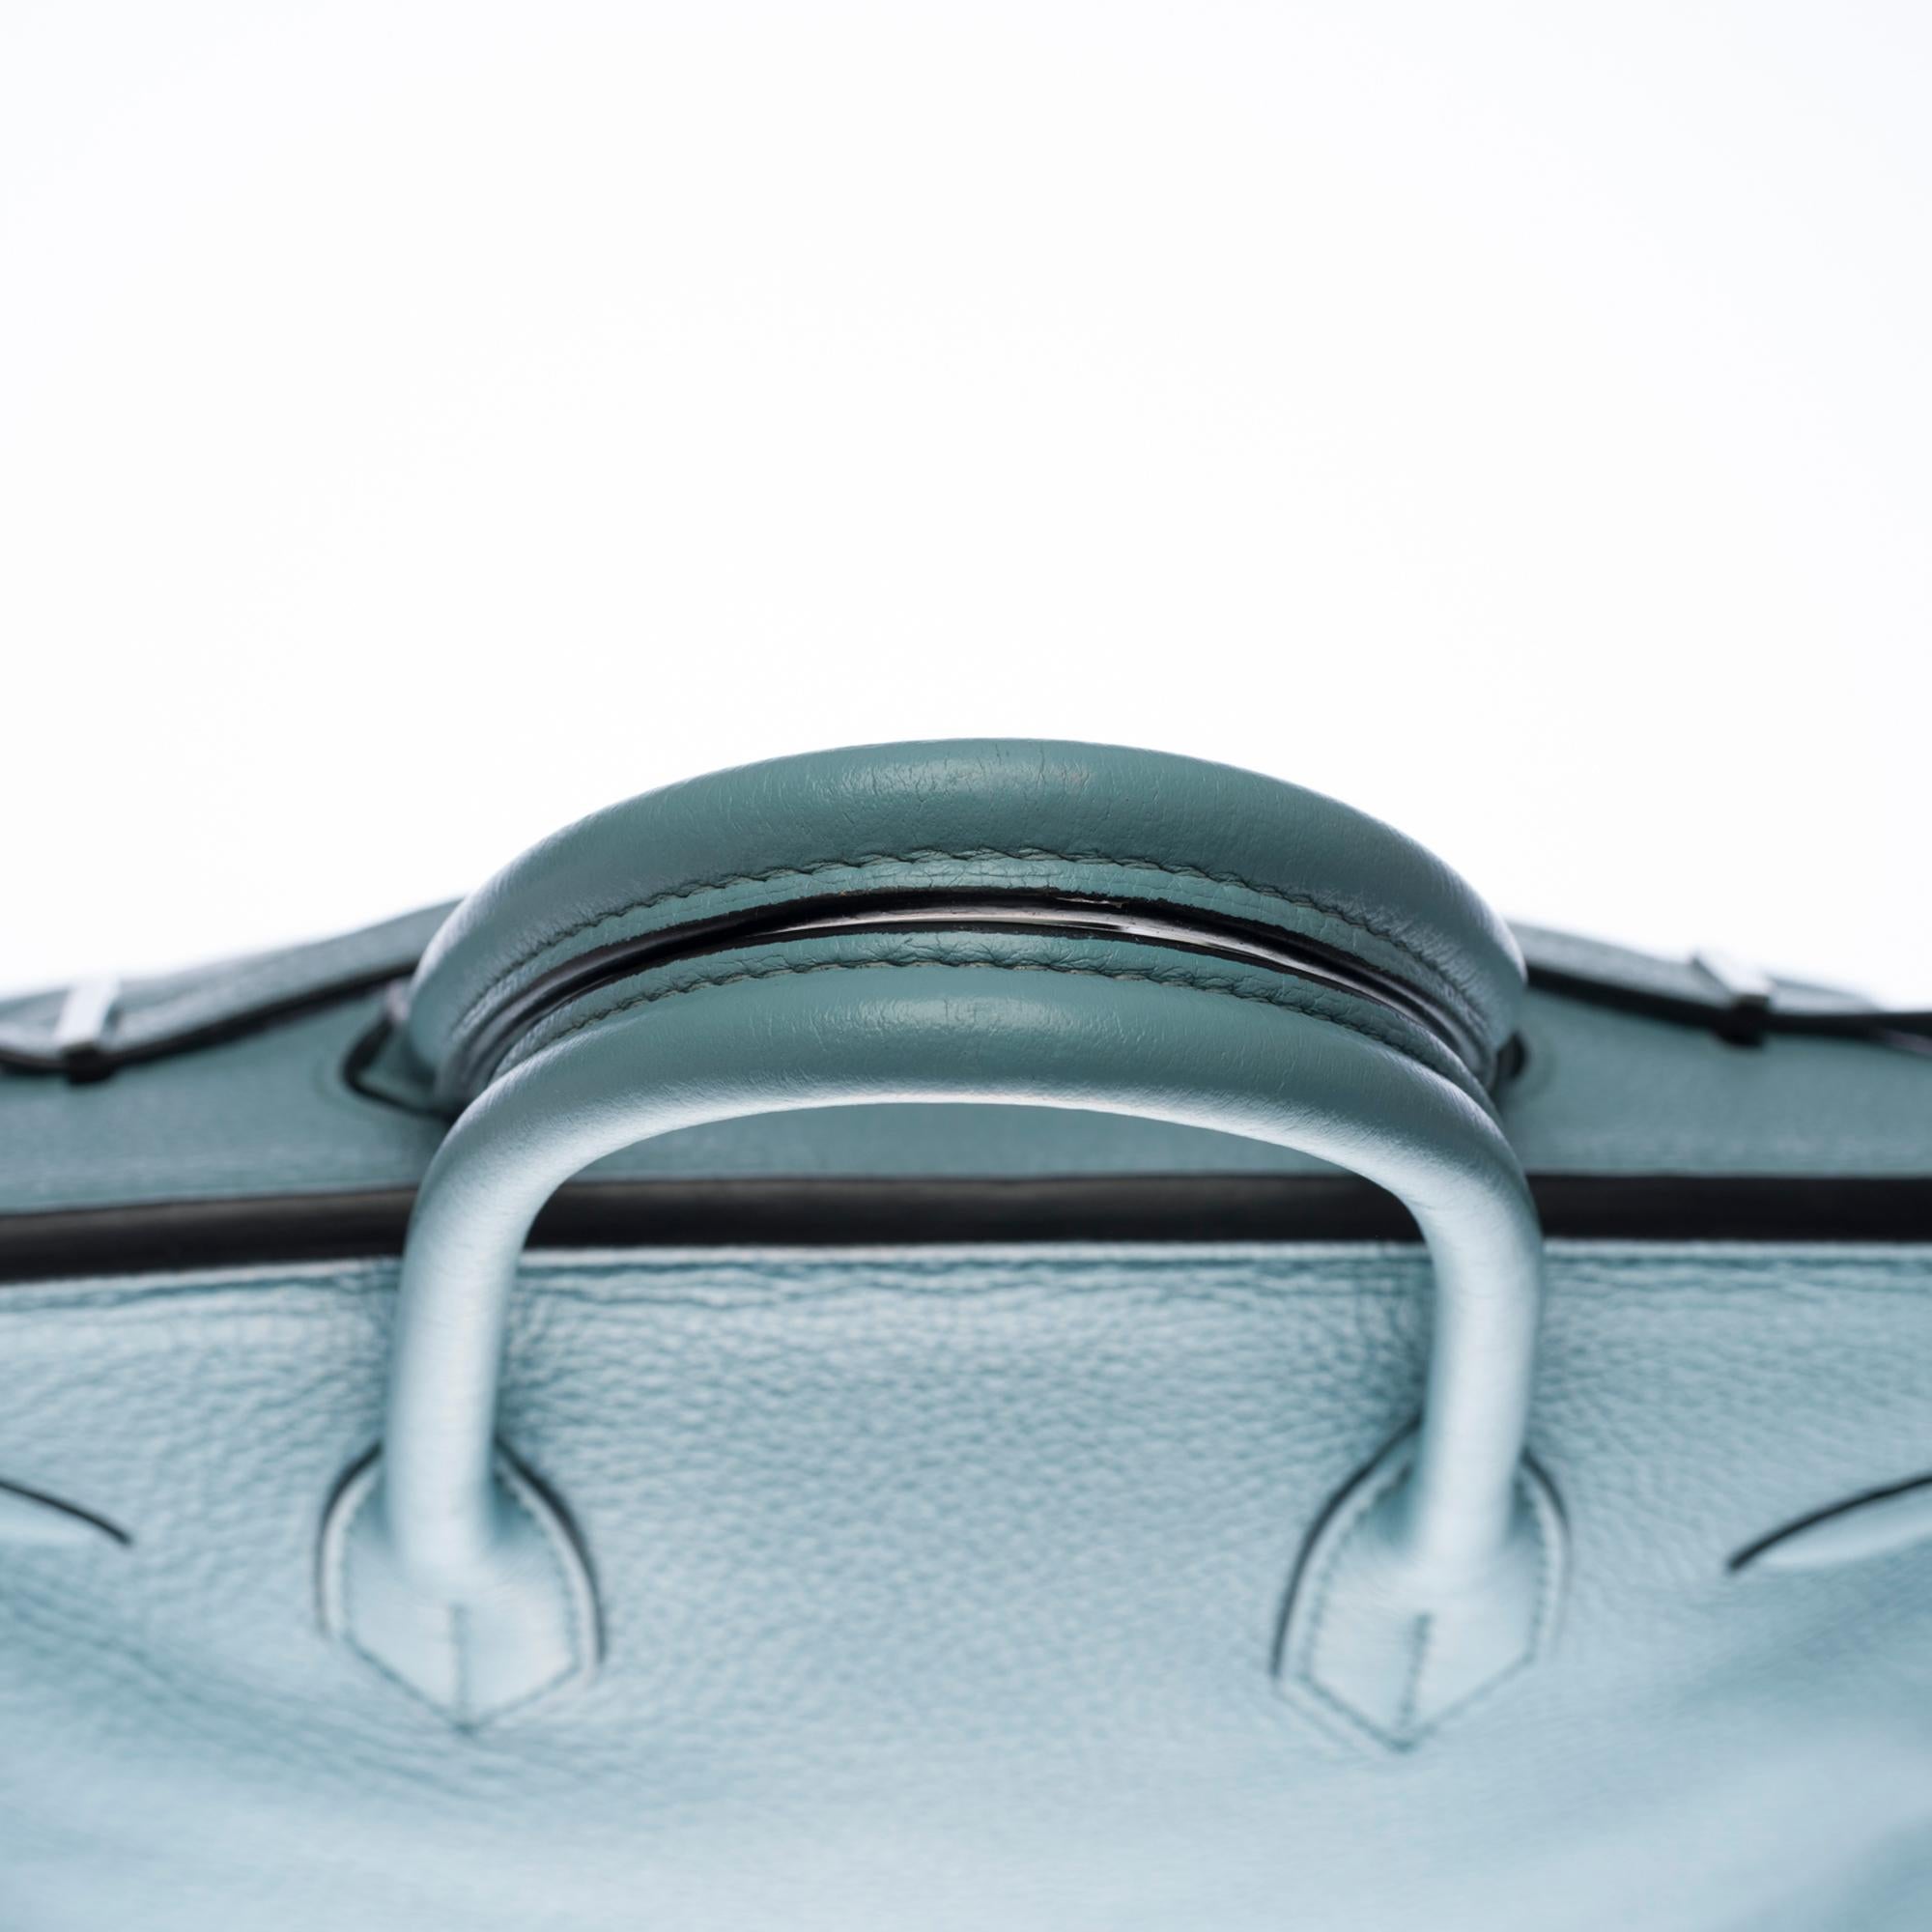 Stunning Hermès Birkin 30 handbag in Bleu ciel Togo leather, SHW 2